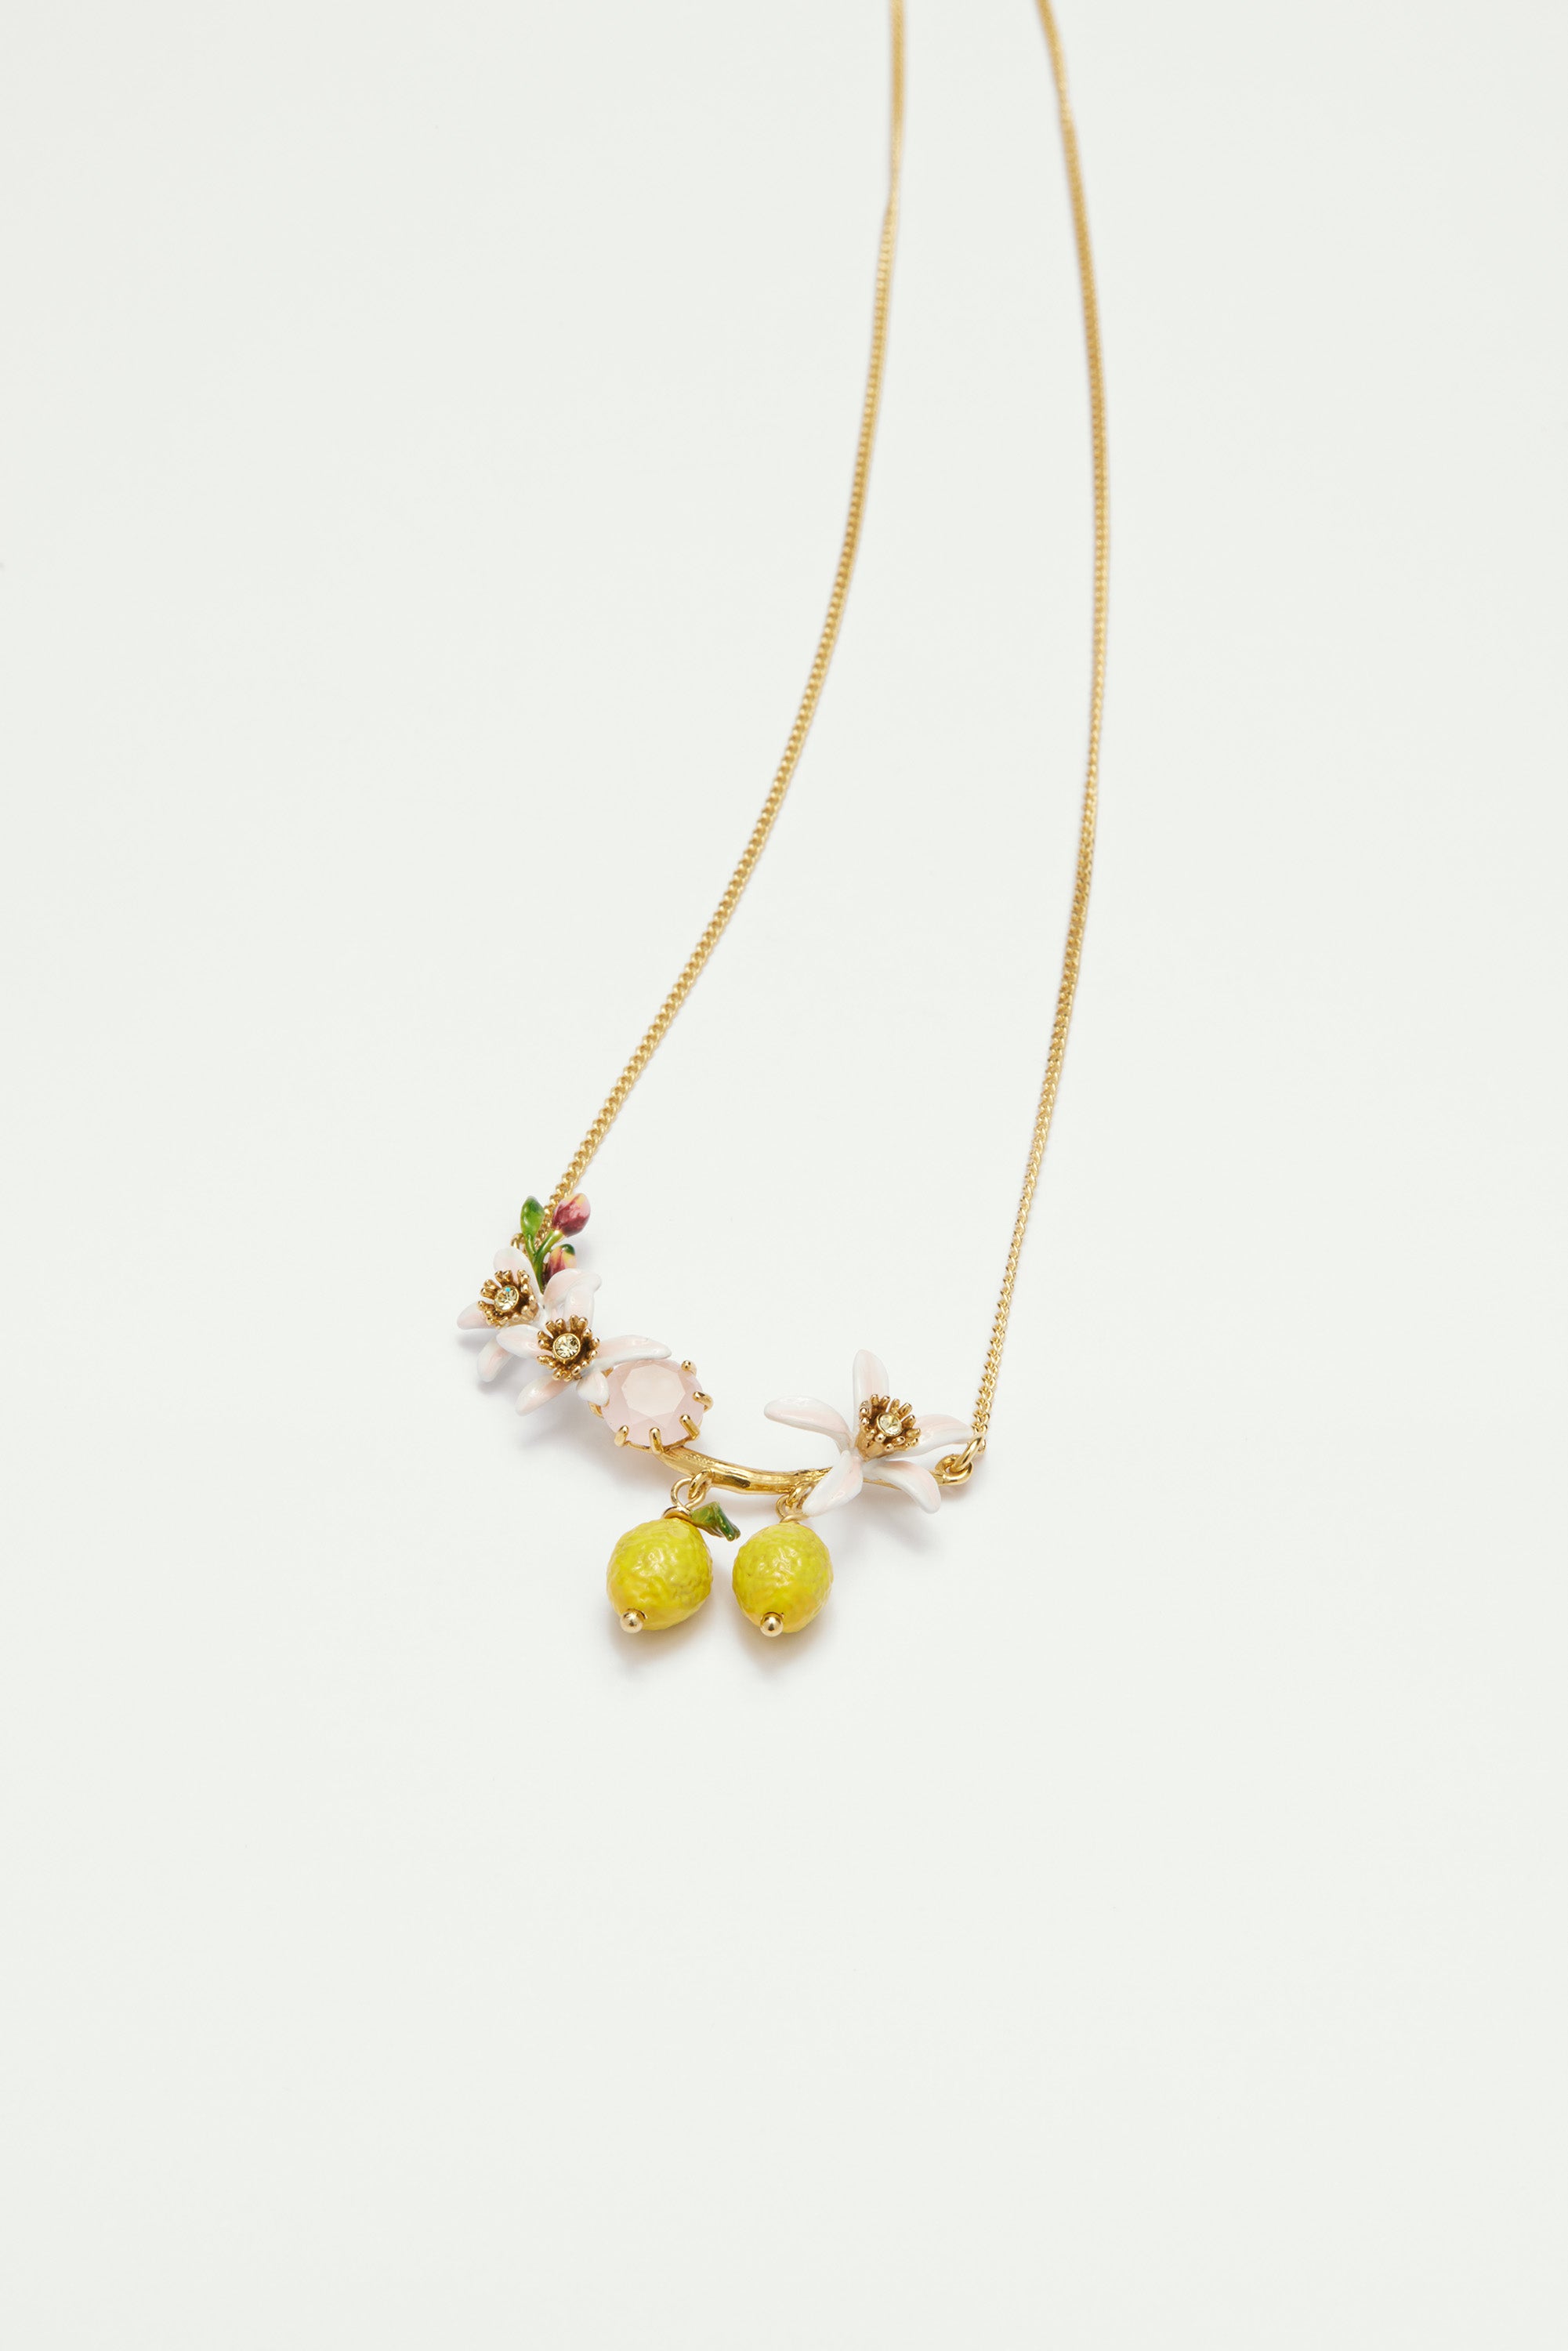 Lemons, flower buds and lemon blossom statement necklace